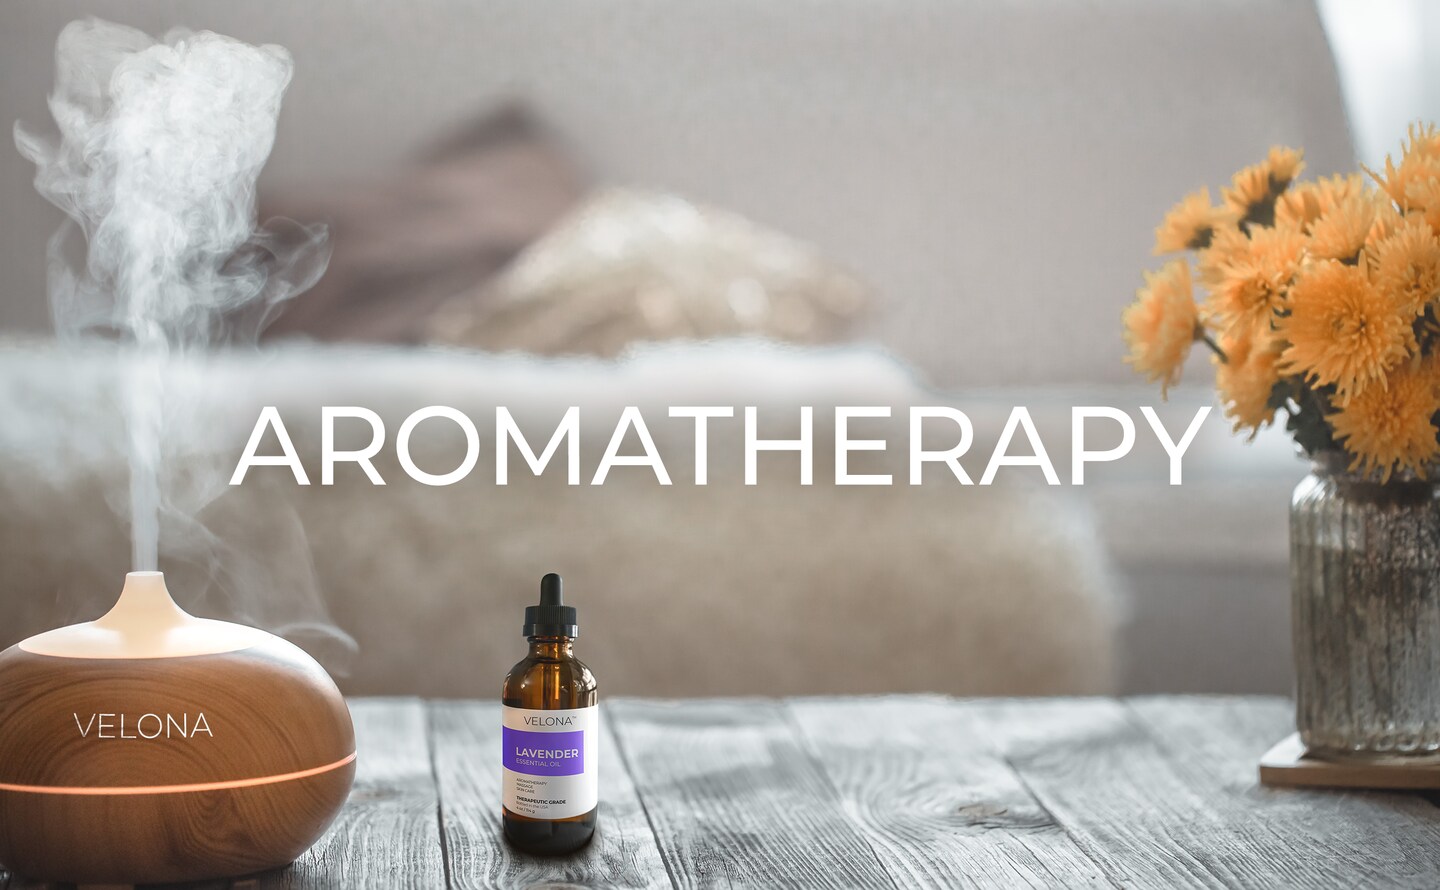 Lavender Essential Oil by Velona - 4 oz | Therapeutic Grade for Aromatherapy Diffuser